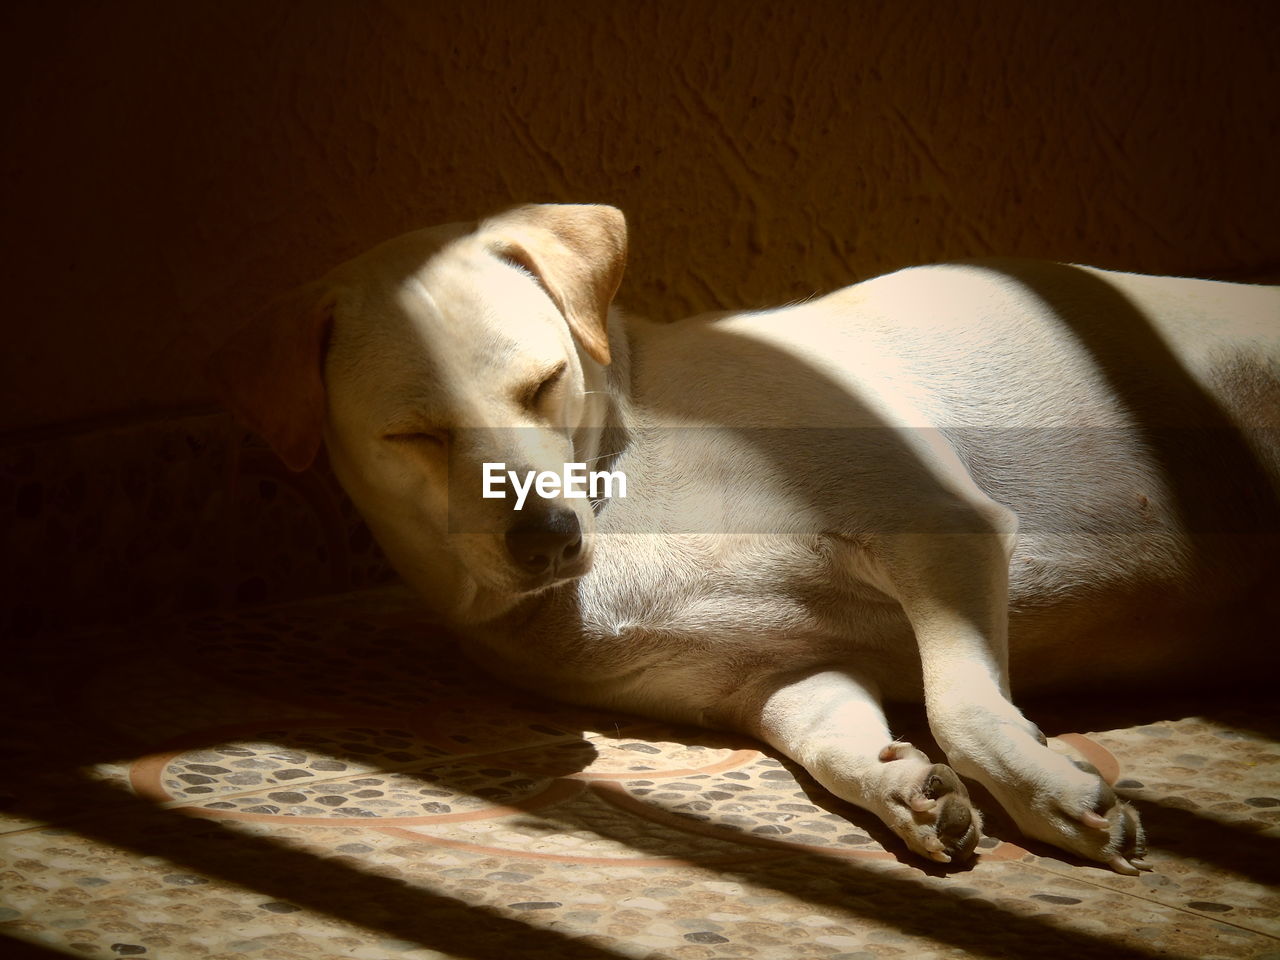 VIEW OF DOG SLEEPING